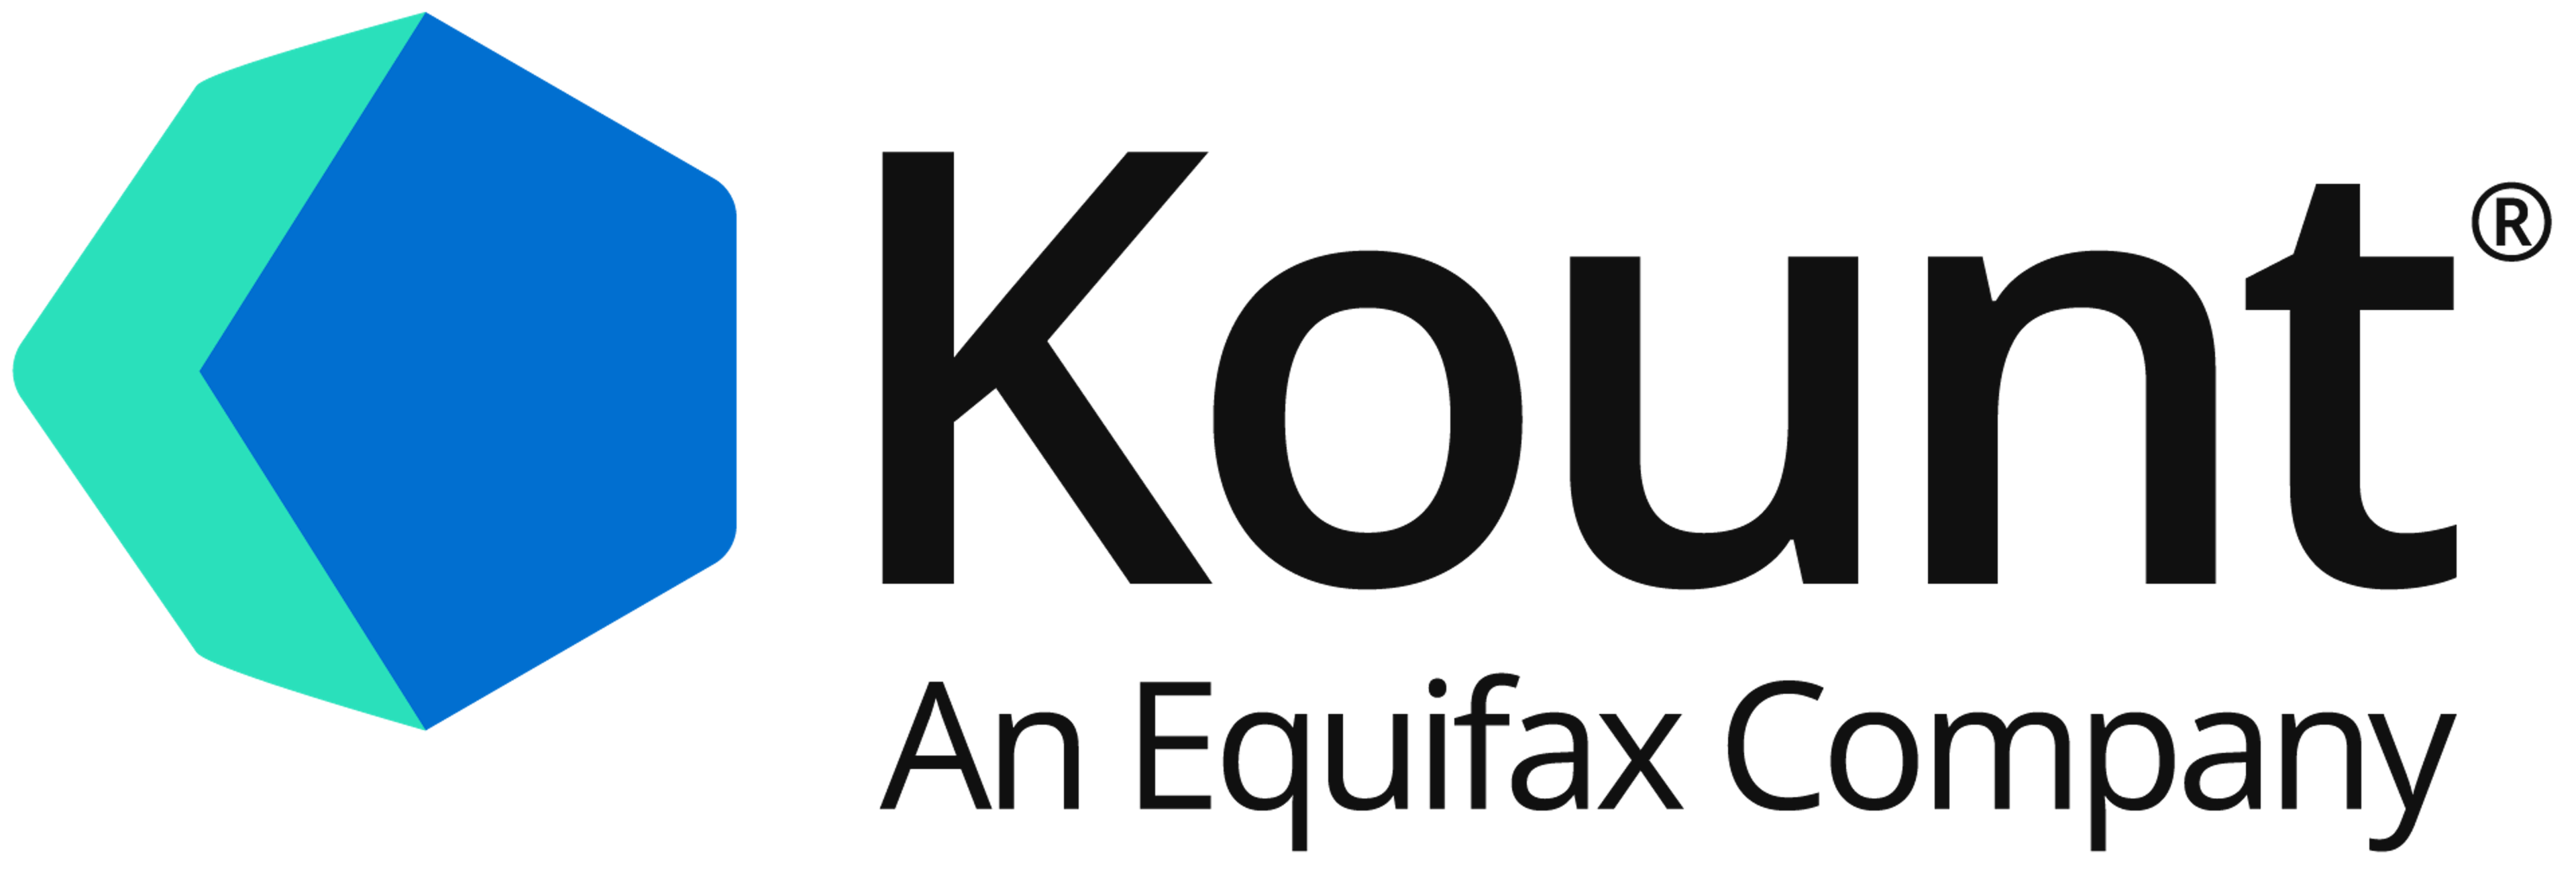 Kount Logo